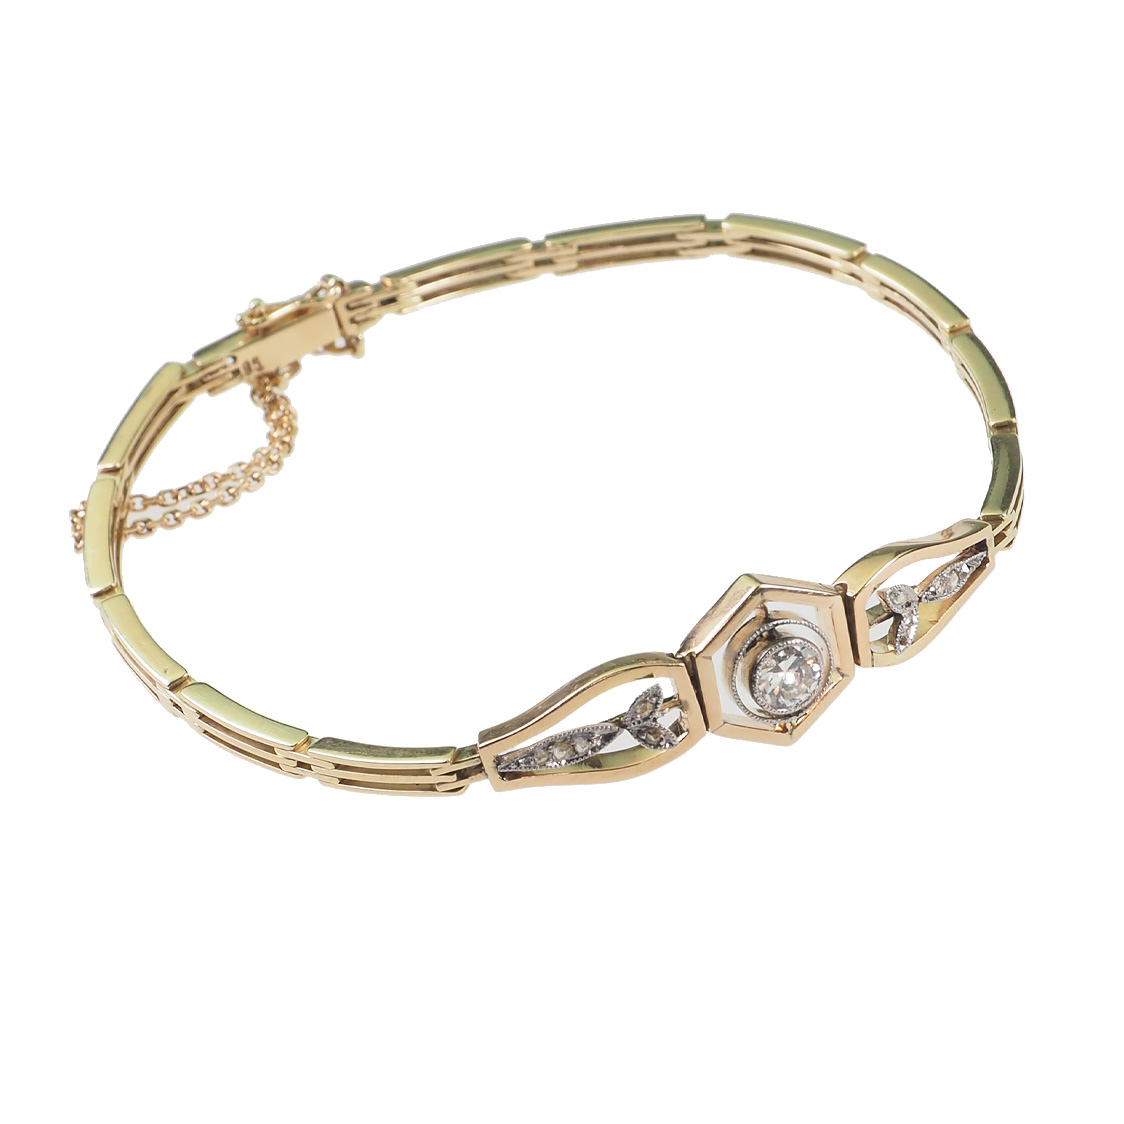 Braccialetti e braccialetti OEM di gioielli OEM / ODM all'ingrosso nel produttore di argento sterling 925